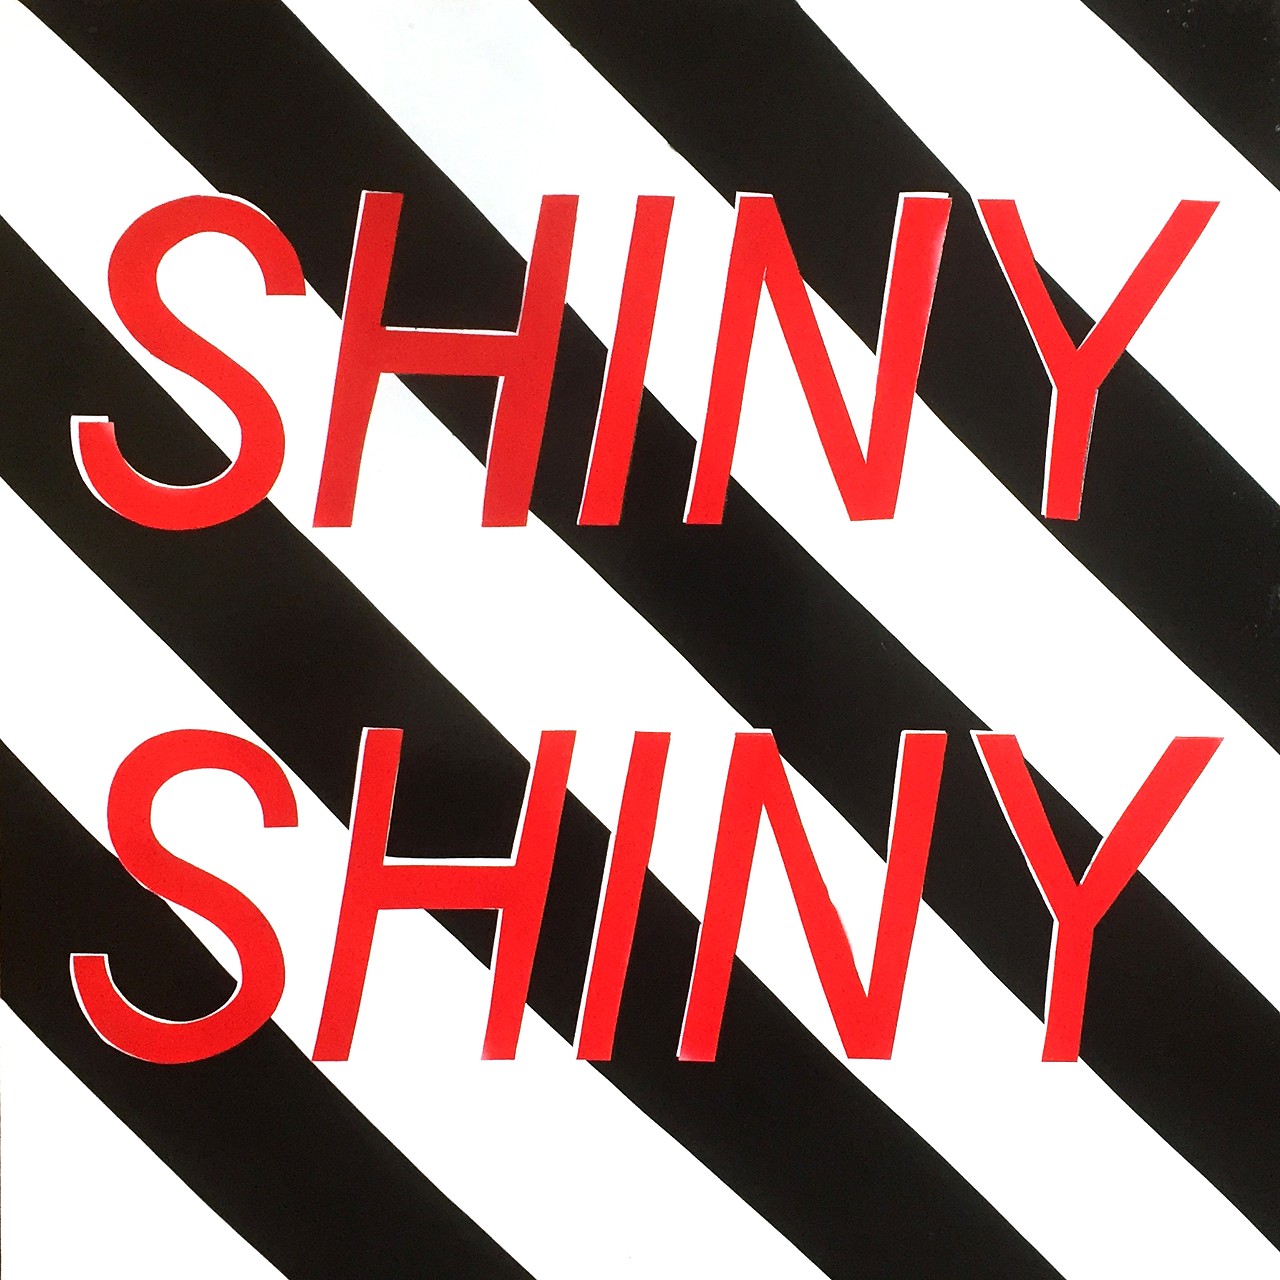 Davin Brainard: New Works - "SHINY SHINY"